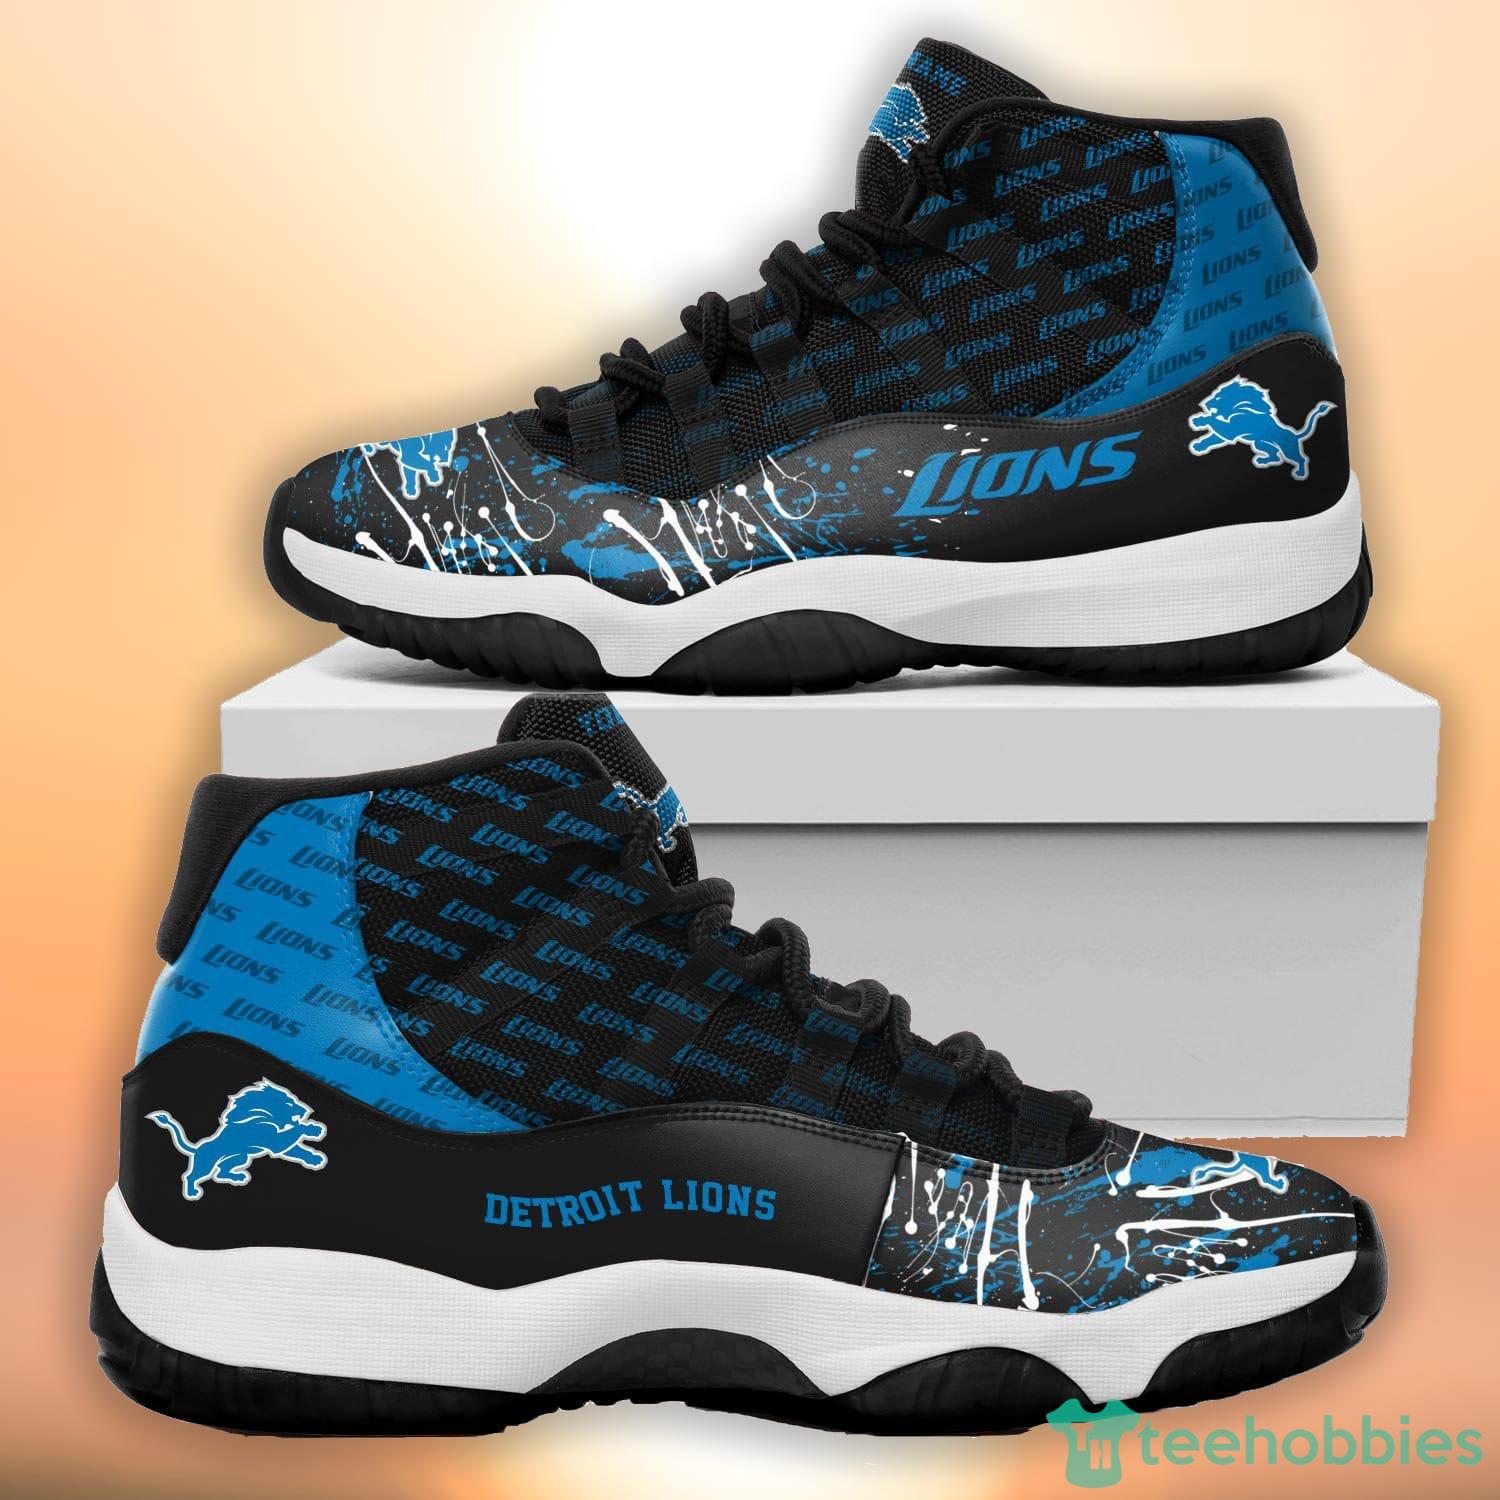 Detroit Lions Custom Name Air Jordan 11 Sneaker Shoes For Sport Fans -  Banantees